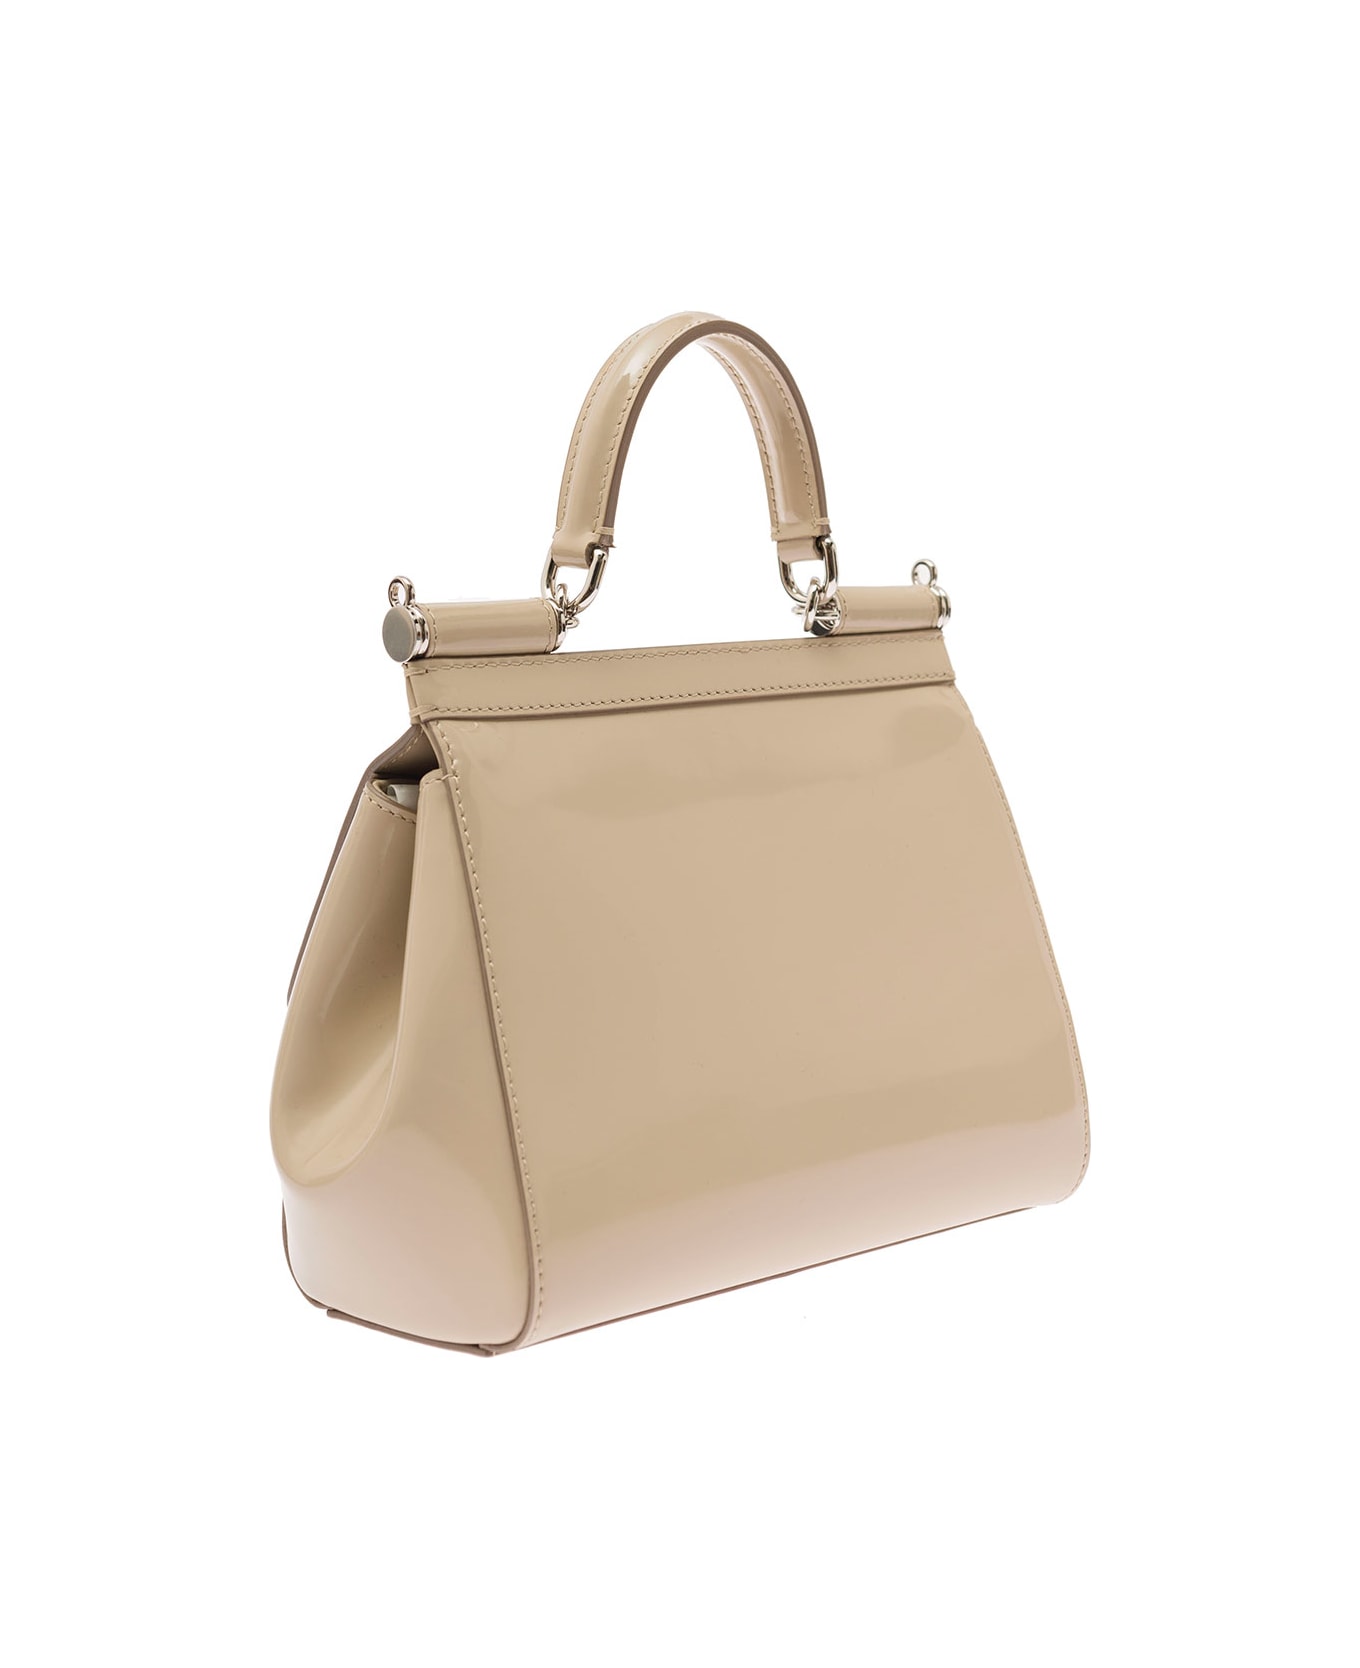 Dolce & Gabbana Beige Sicily Medium Handbag In Shiny Leather Woman - Beige